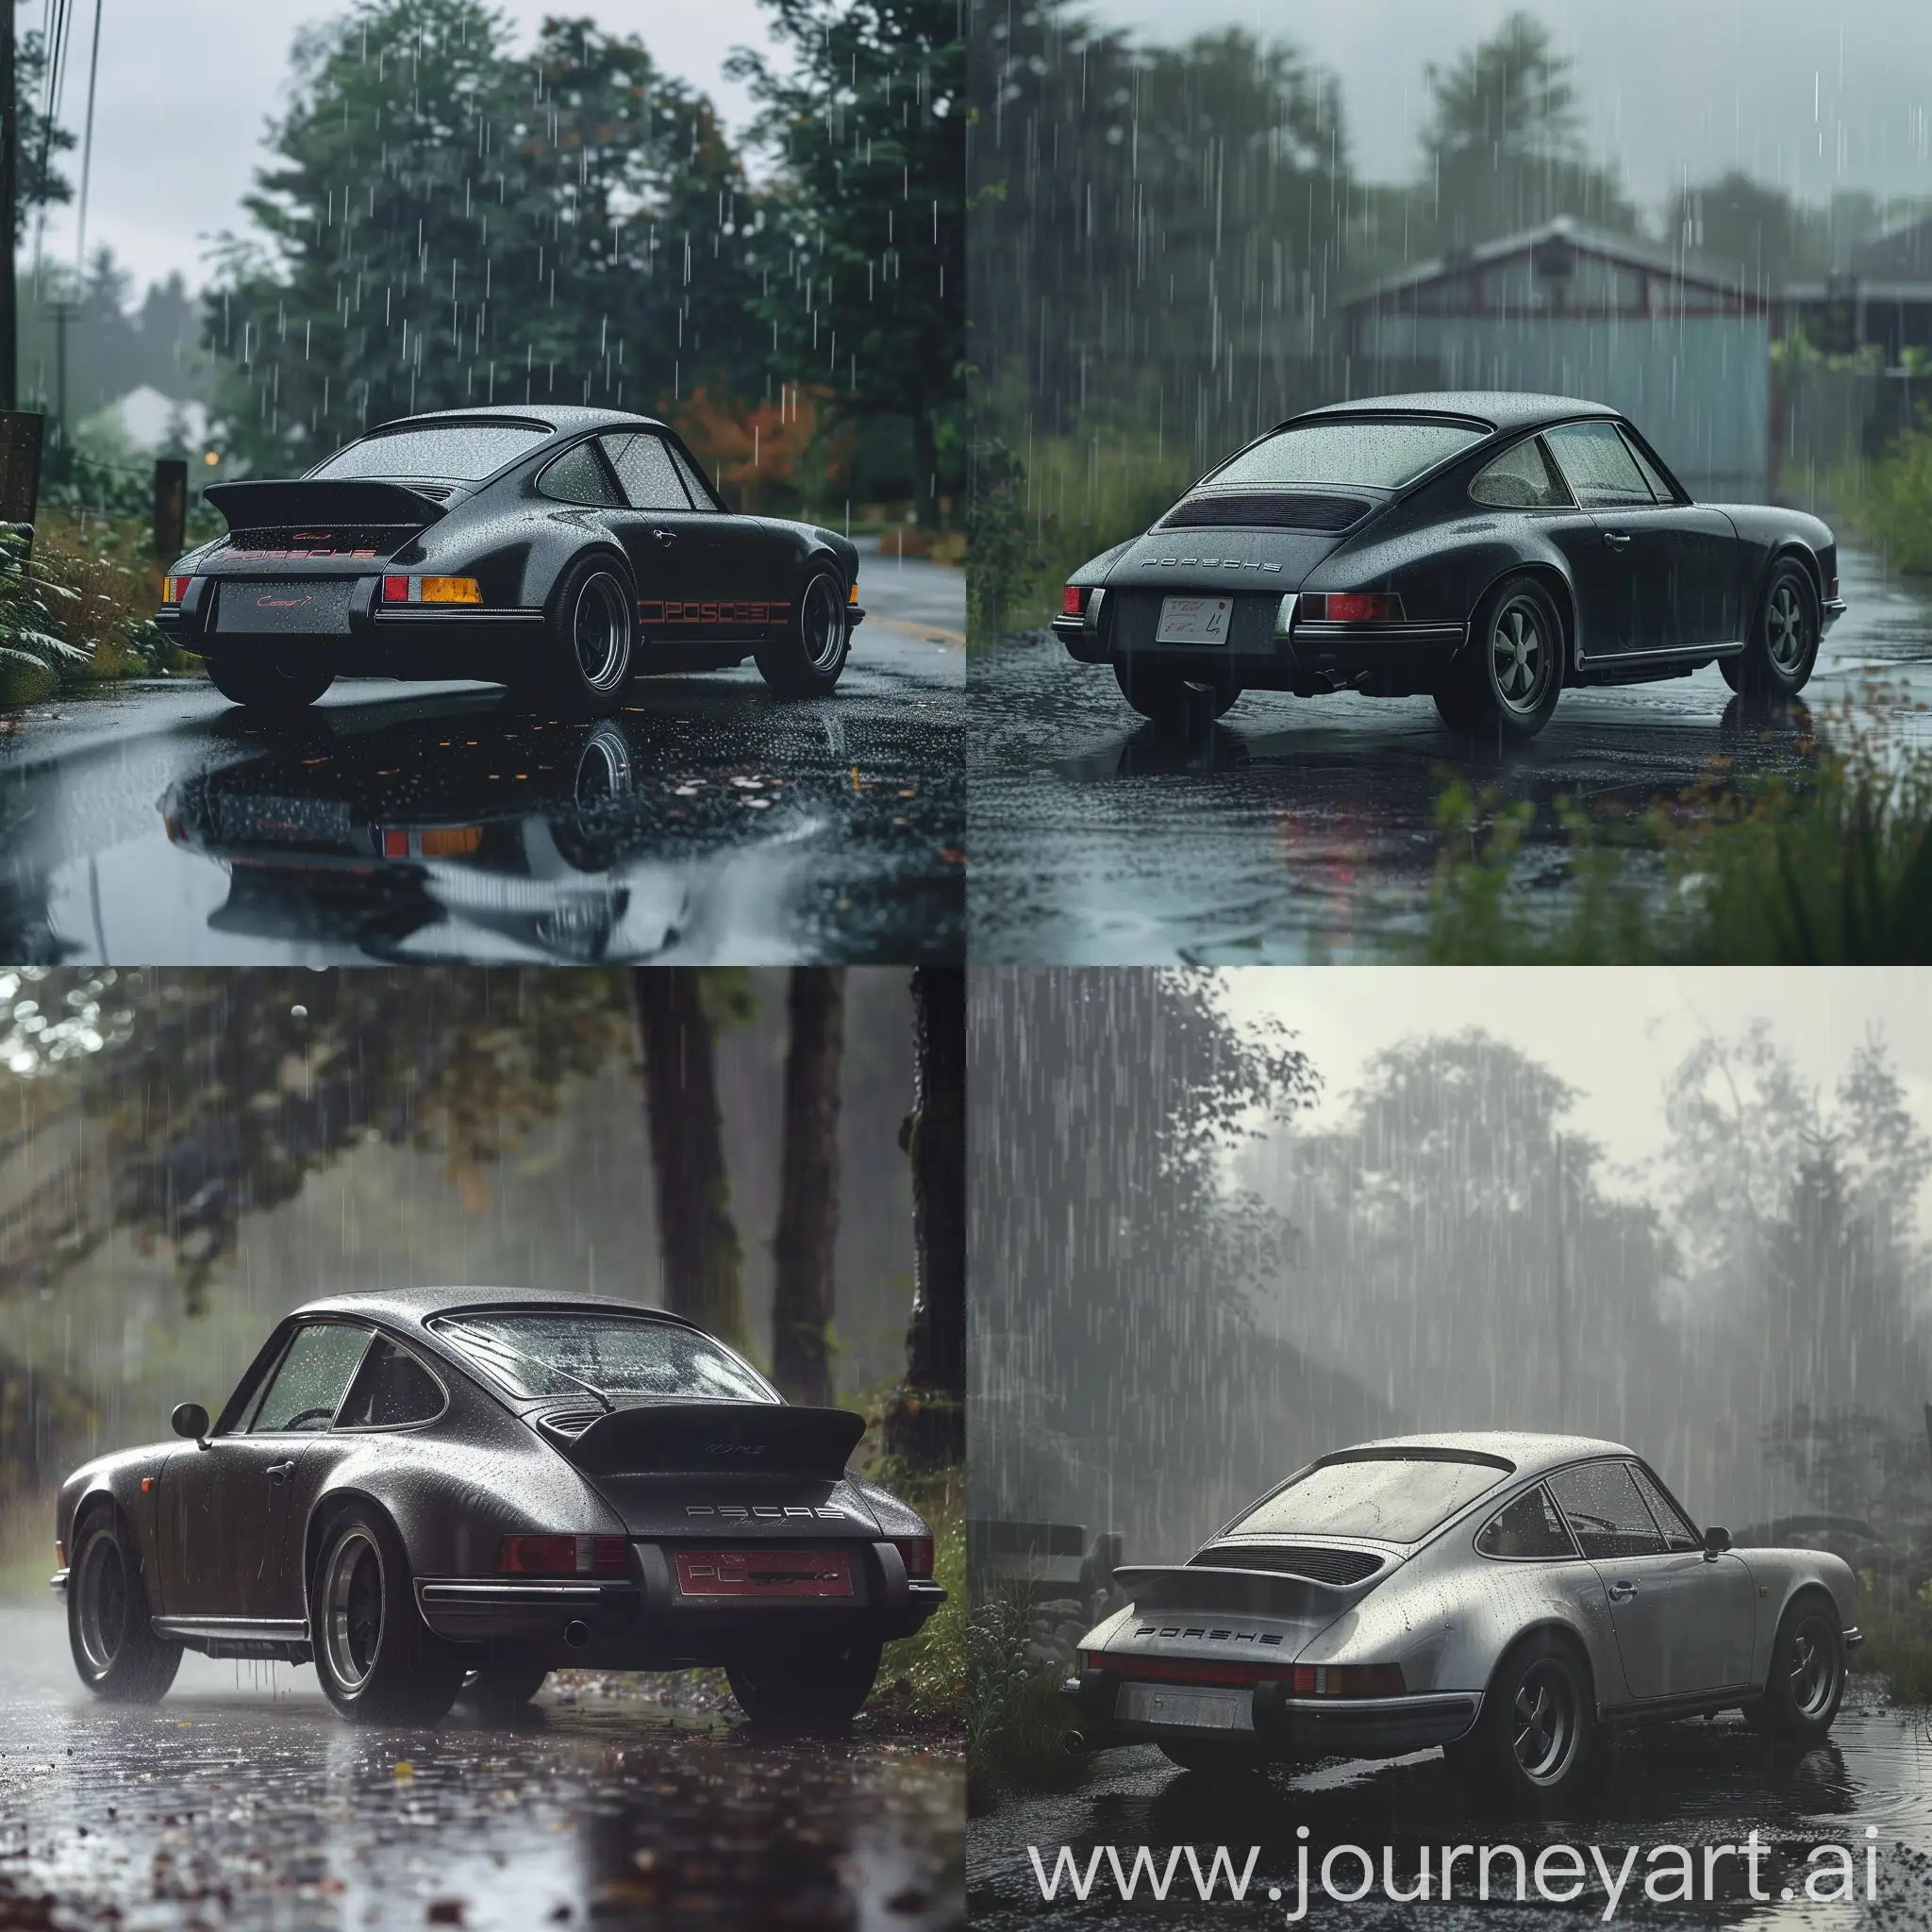 Vintage-Porsche-911-Standing-in-Rain-with-Moody-Atmosphere